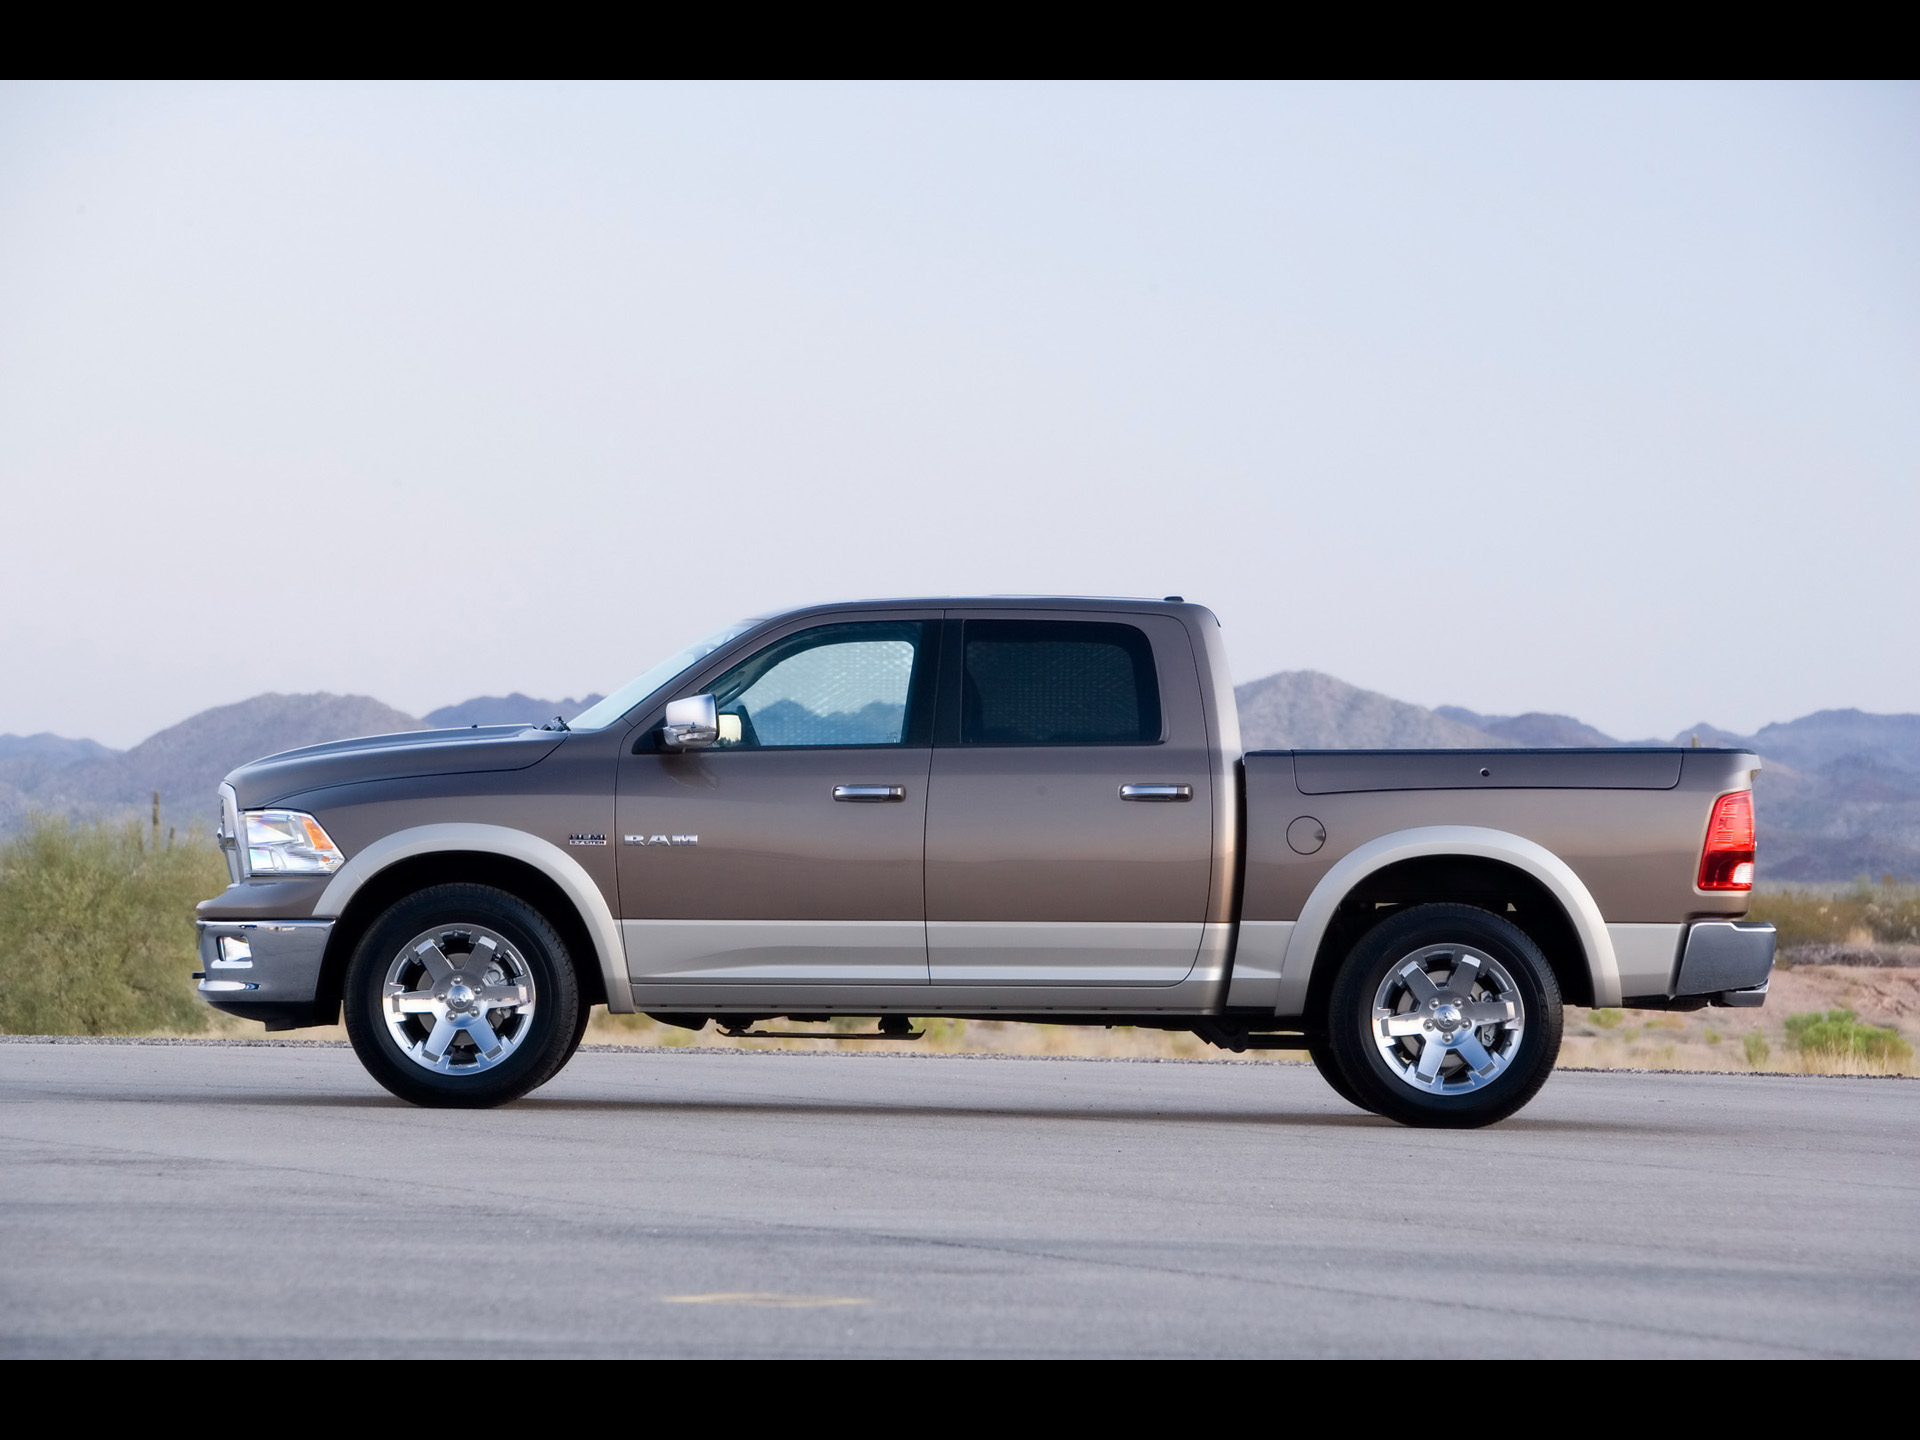 2009, Dodge, Ram, Pickup, Truck Wallpaper